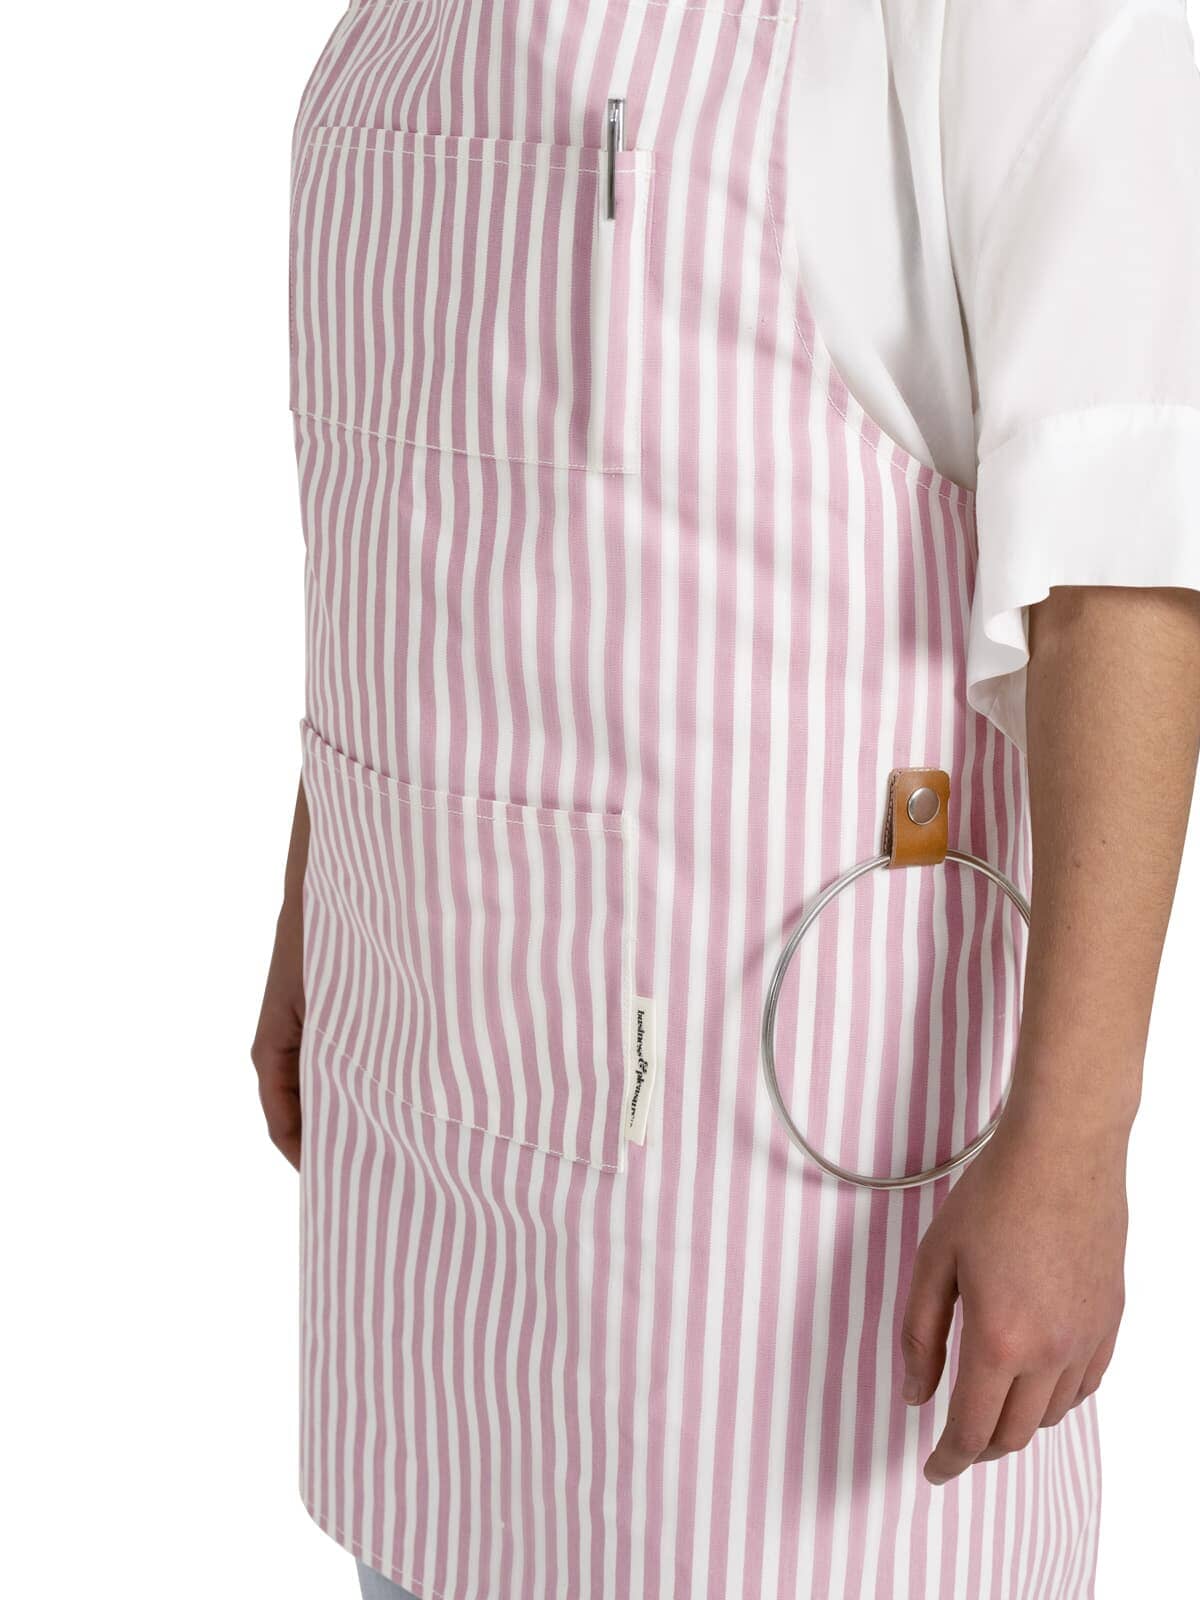 Studio image of pink apron on model